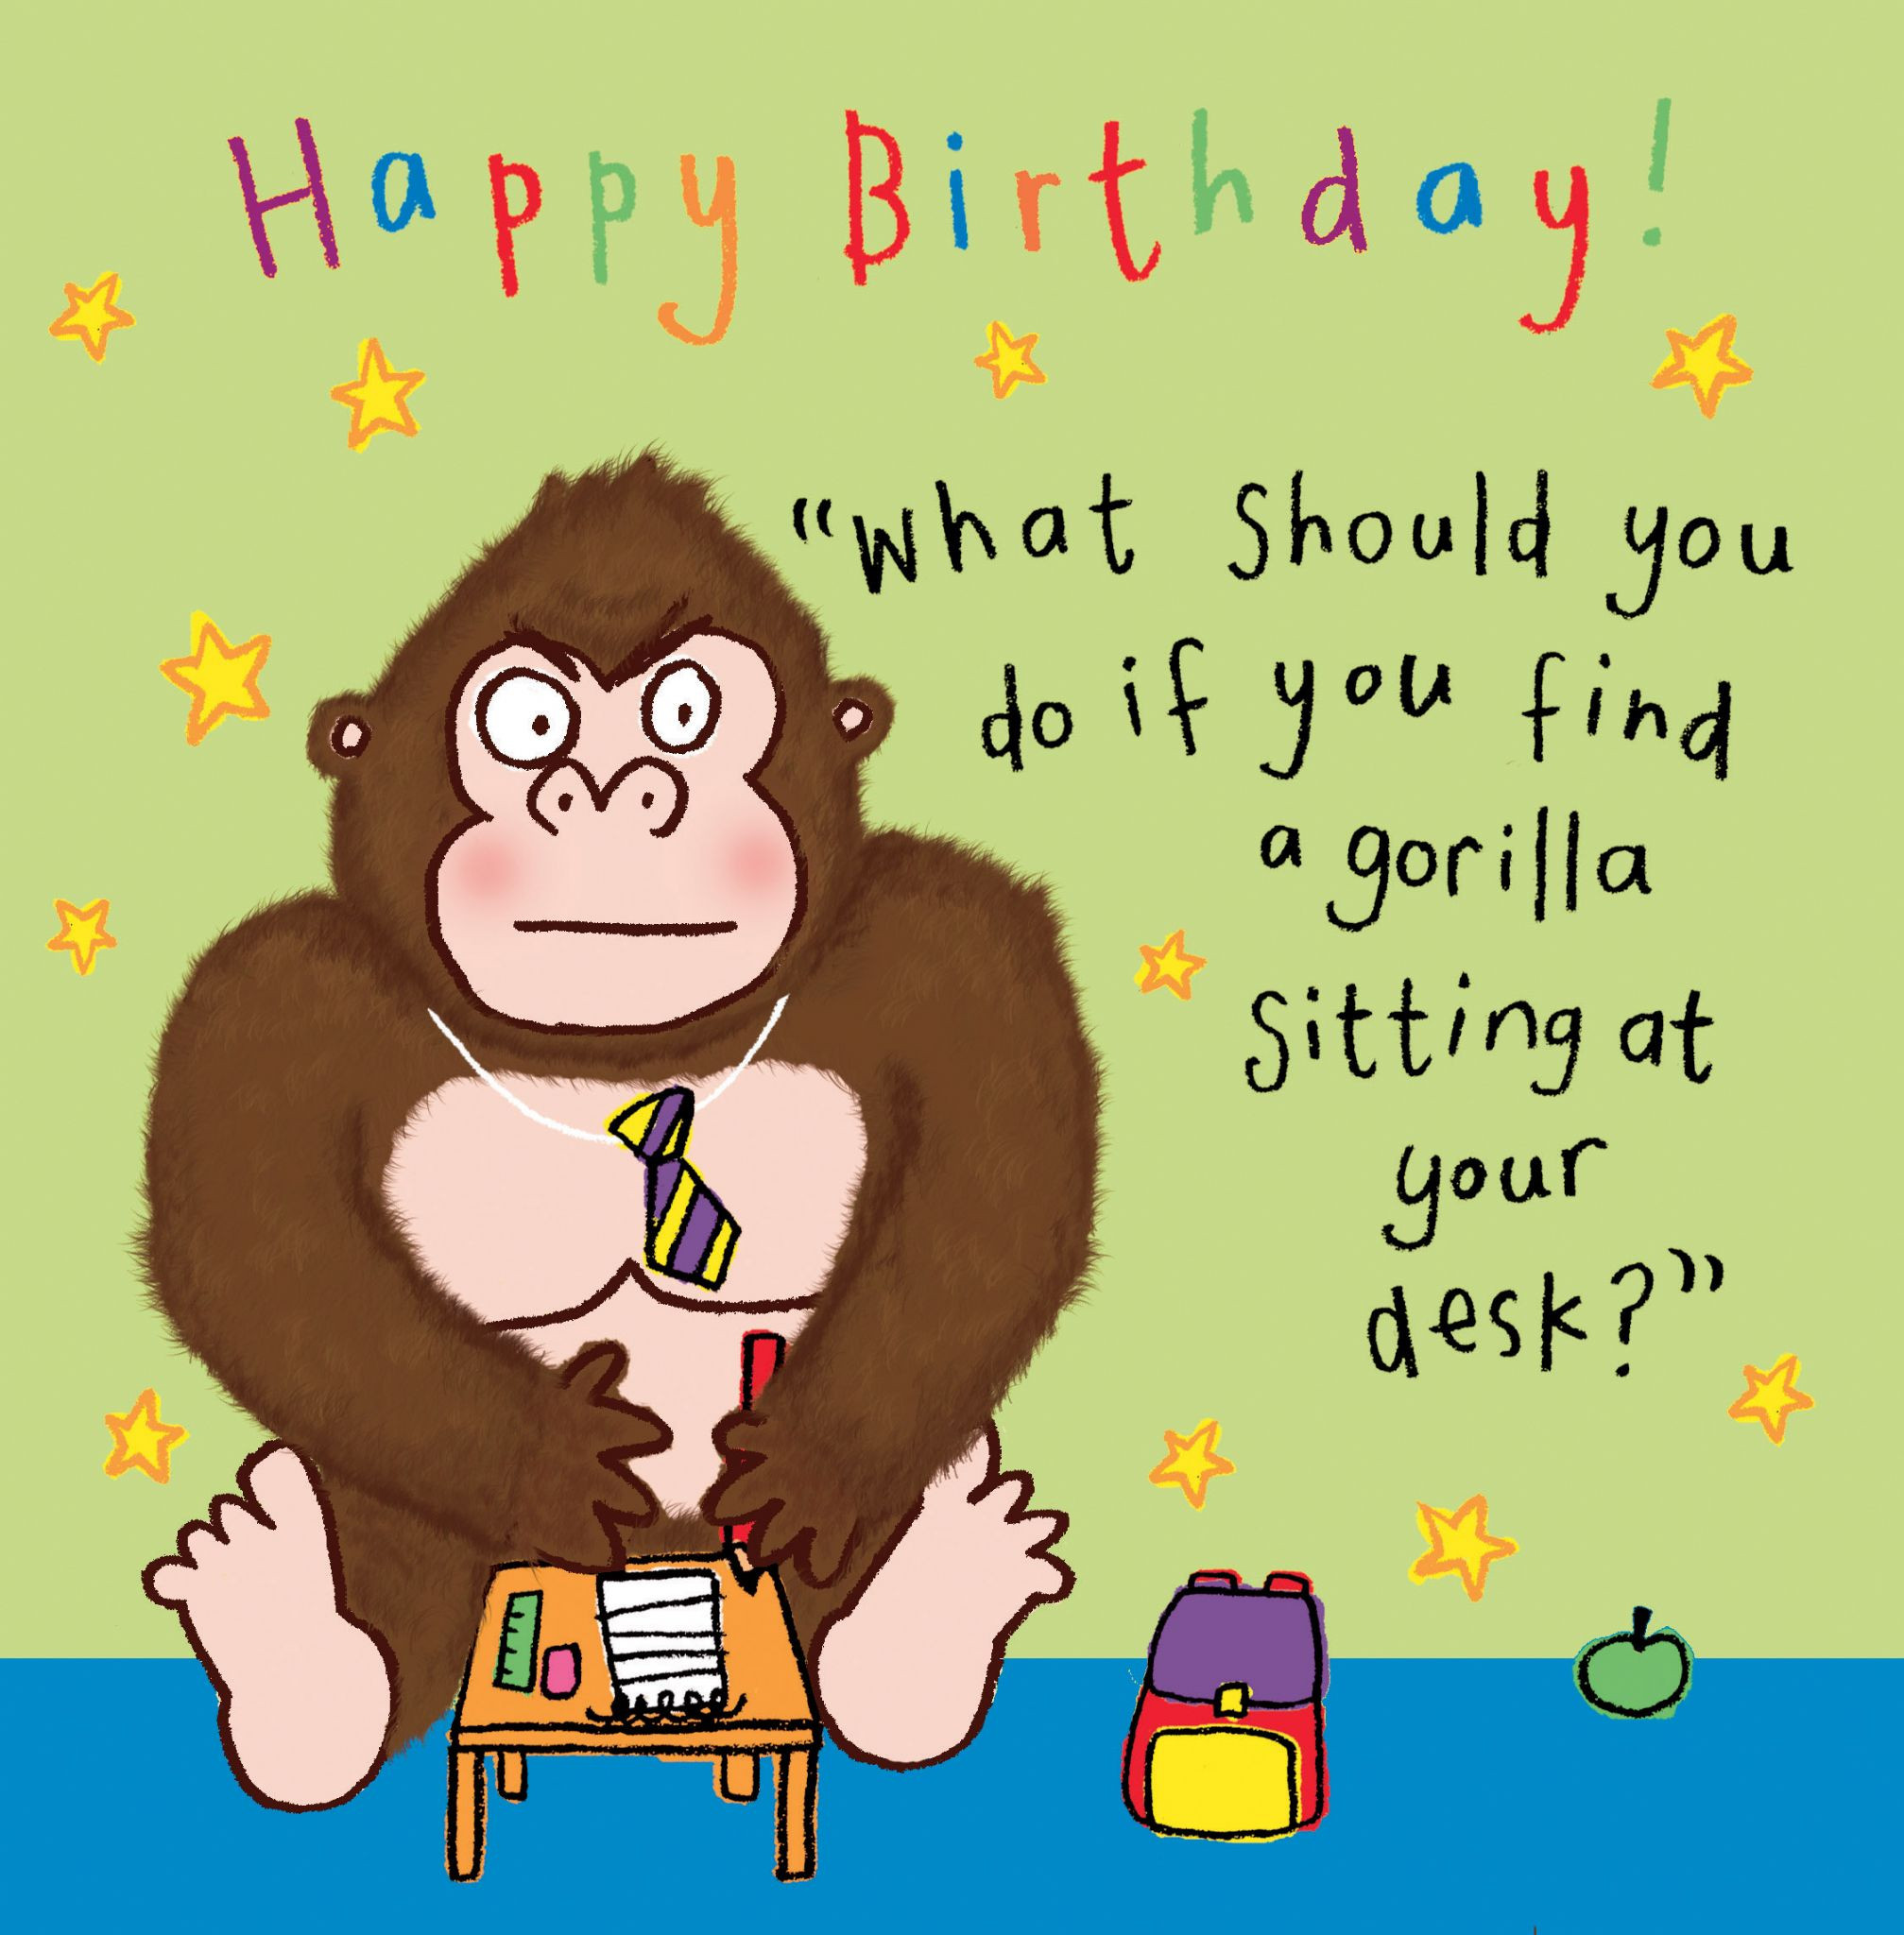 Funny Birthday Cards For Kids
 Gorilla Funny Joke Birthday Card For Kids tw434